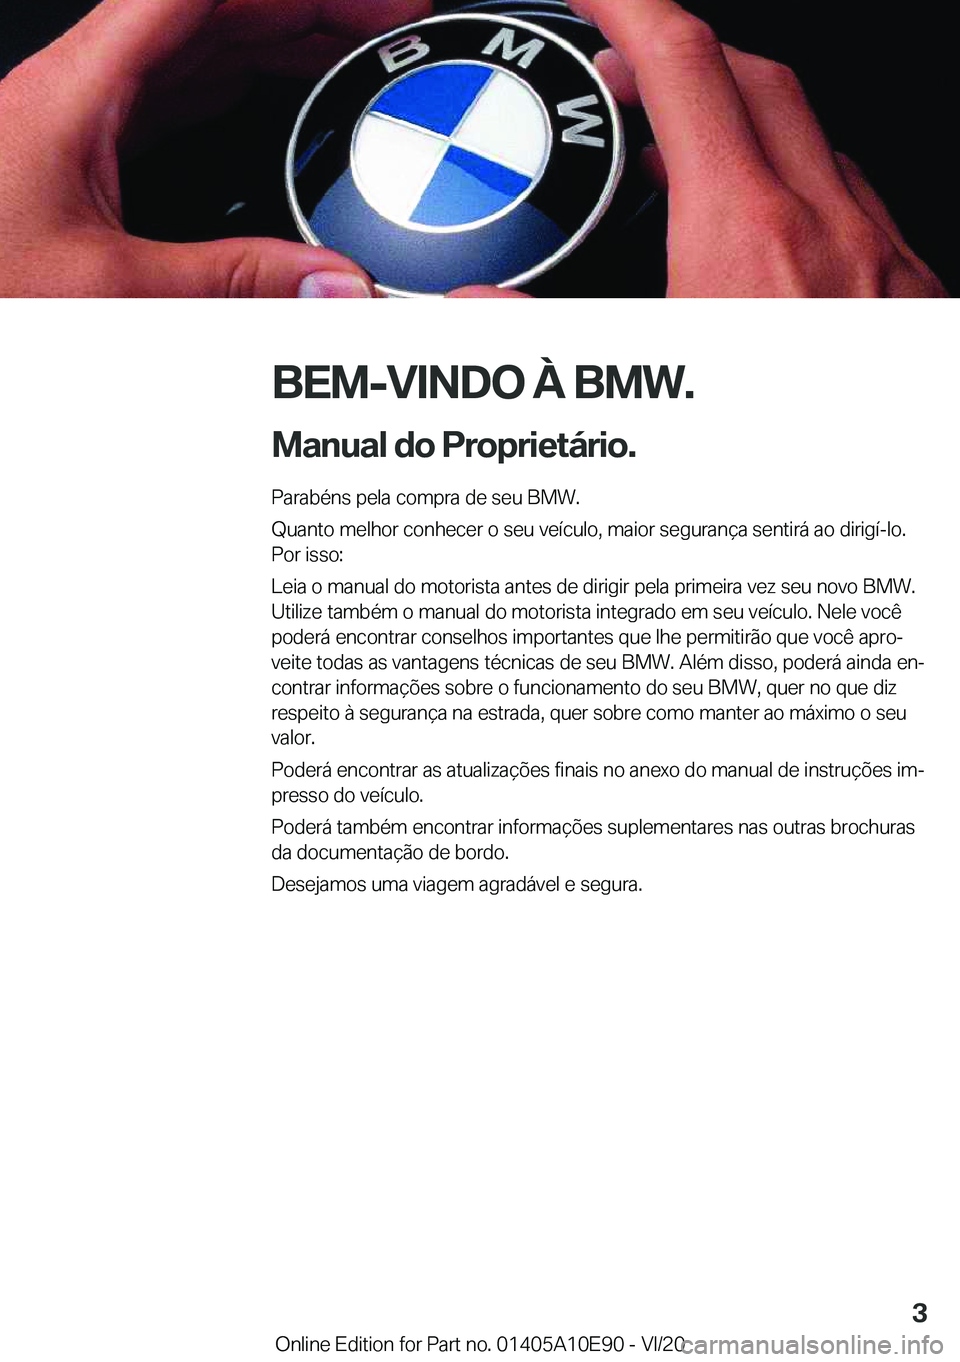 BMW X3 2021  Manual do condutor (in Portuguese) �B�E�M�-�V�I�N�D�O��À��B�M�W�.
�M�a�n�u�a�l��d�o��P�r�o�p�r�i�e�t�á�r�i�o�. �P�a�r�a�b�é�n�s��p�e�l�a��c�o�m�p�r�a��d�e��s�e�u��B�M�W�.
�Q�u�a�n�t�o��m�e�l�h�o�r��c�o�n�h�e�c�e�r��o��s